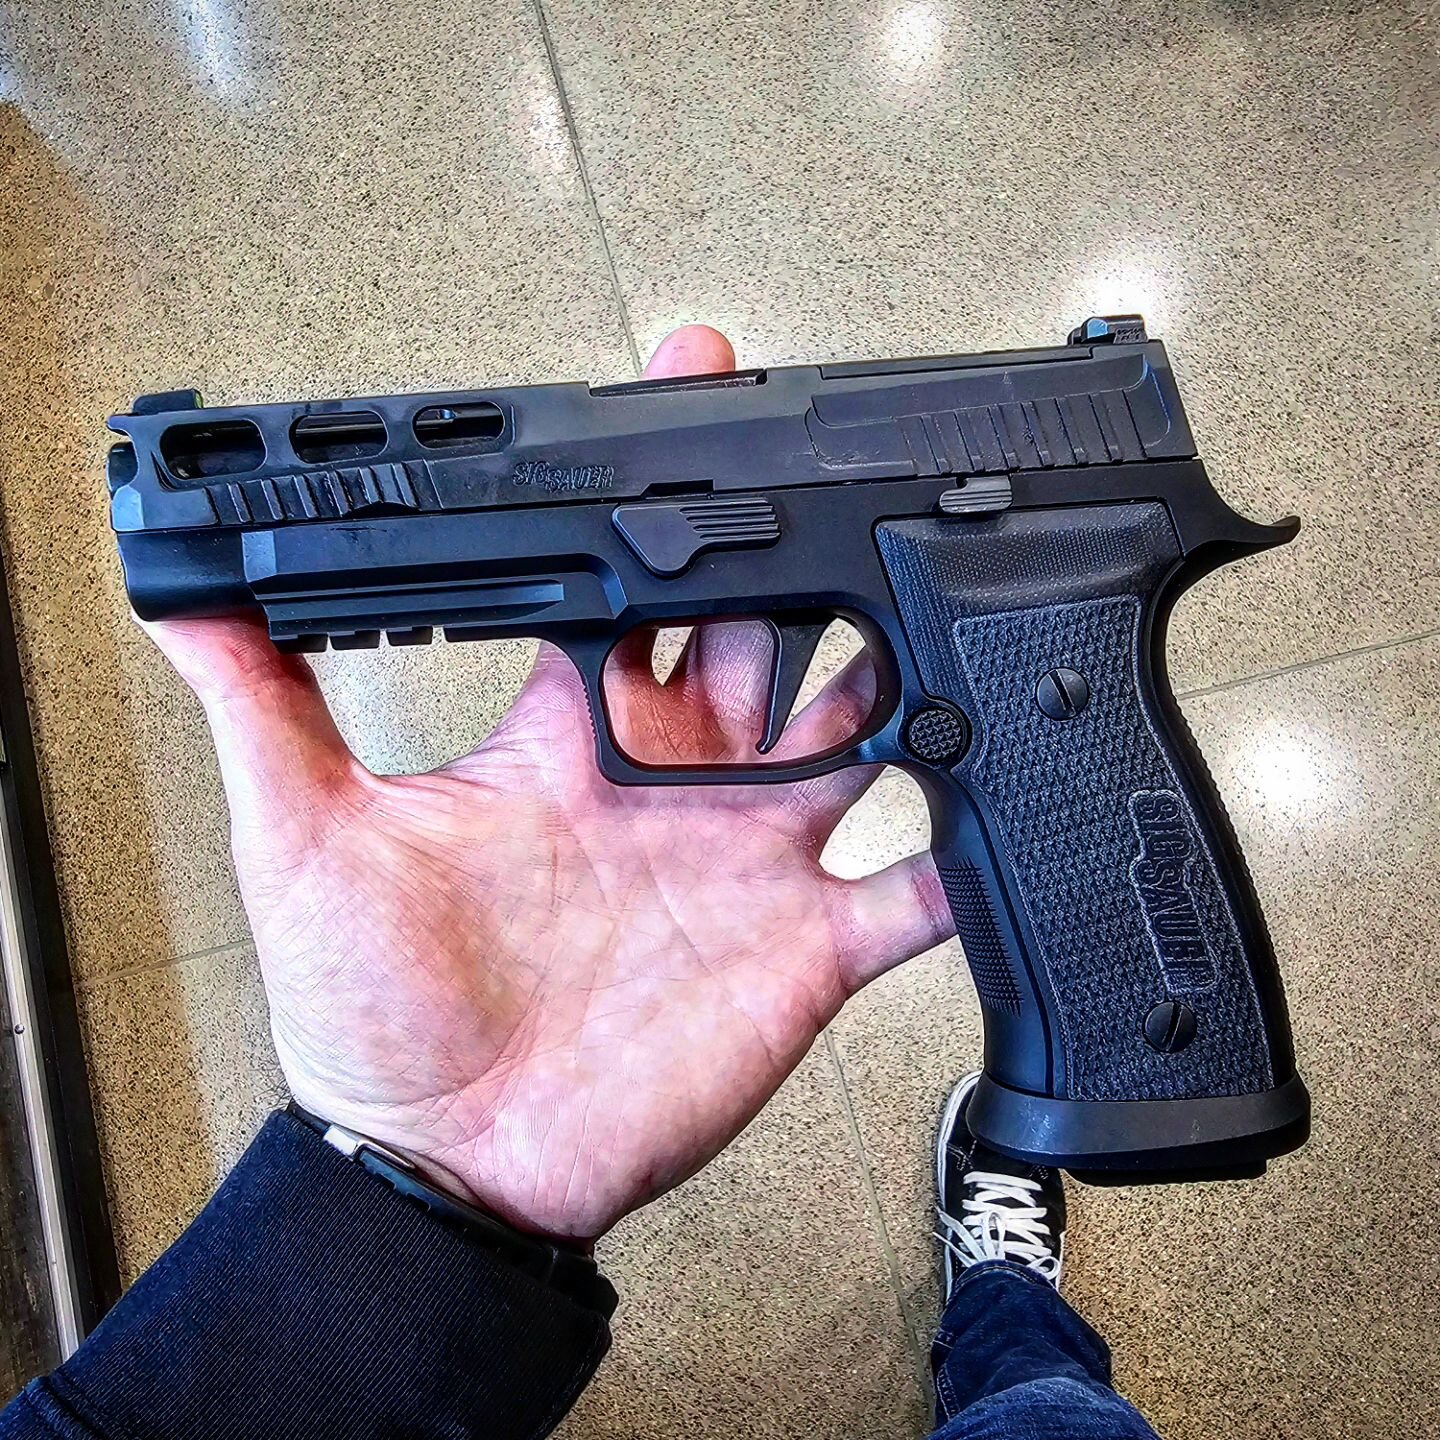 What's your favorite @sigsauerinc pistol?